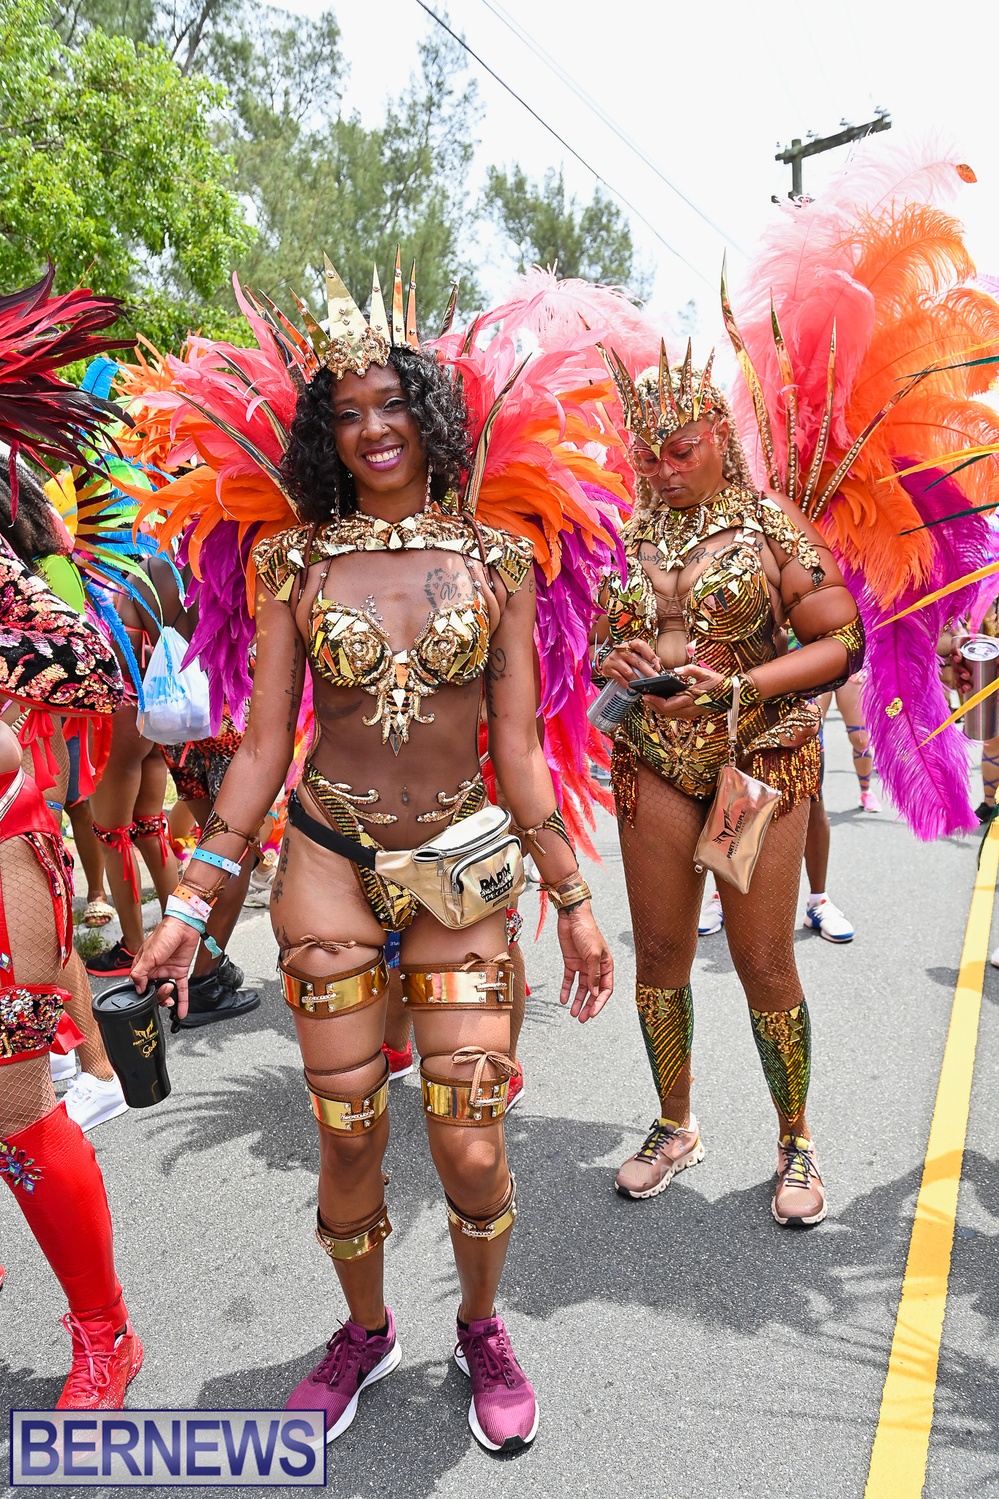 Carnival in Bermuda ‘Revel de Road’ event  party June 2022 AW (4)